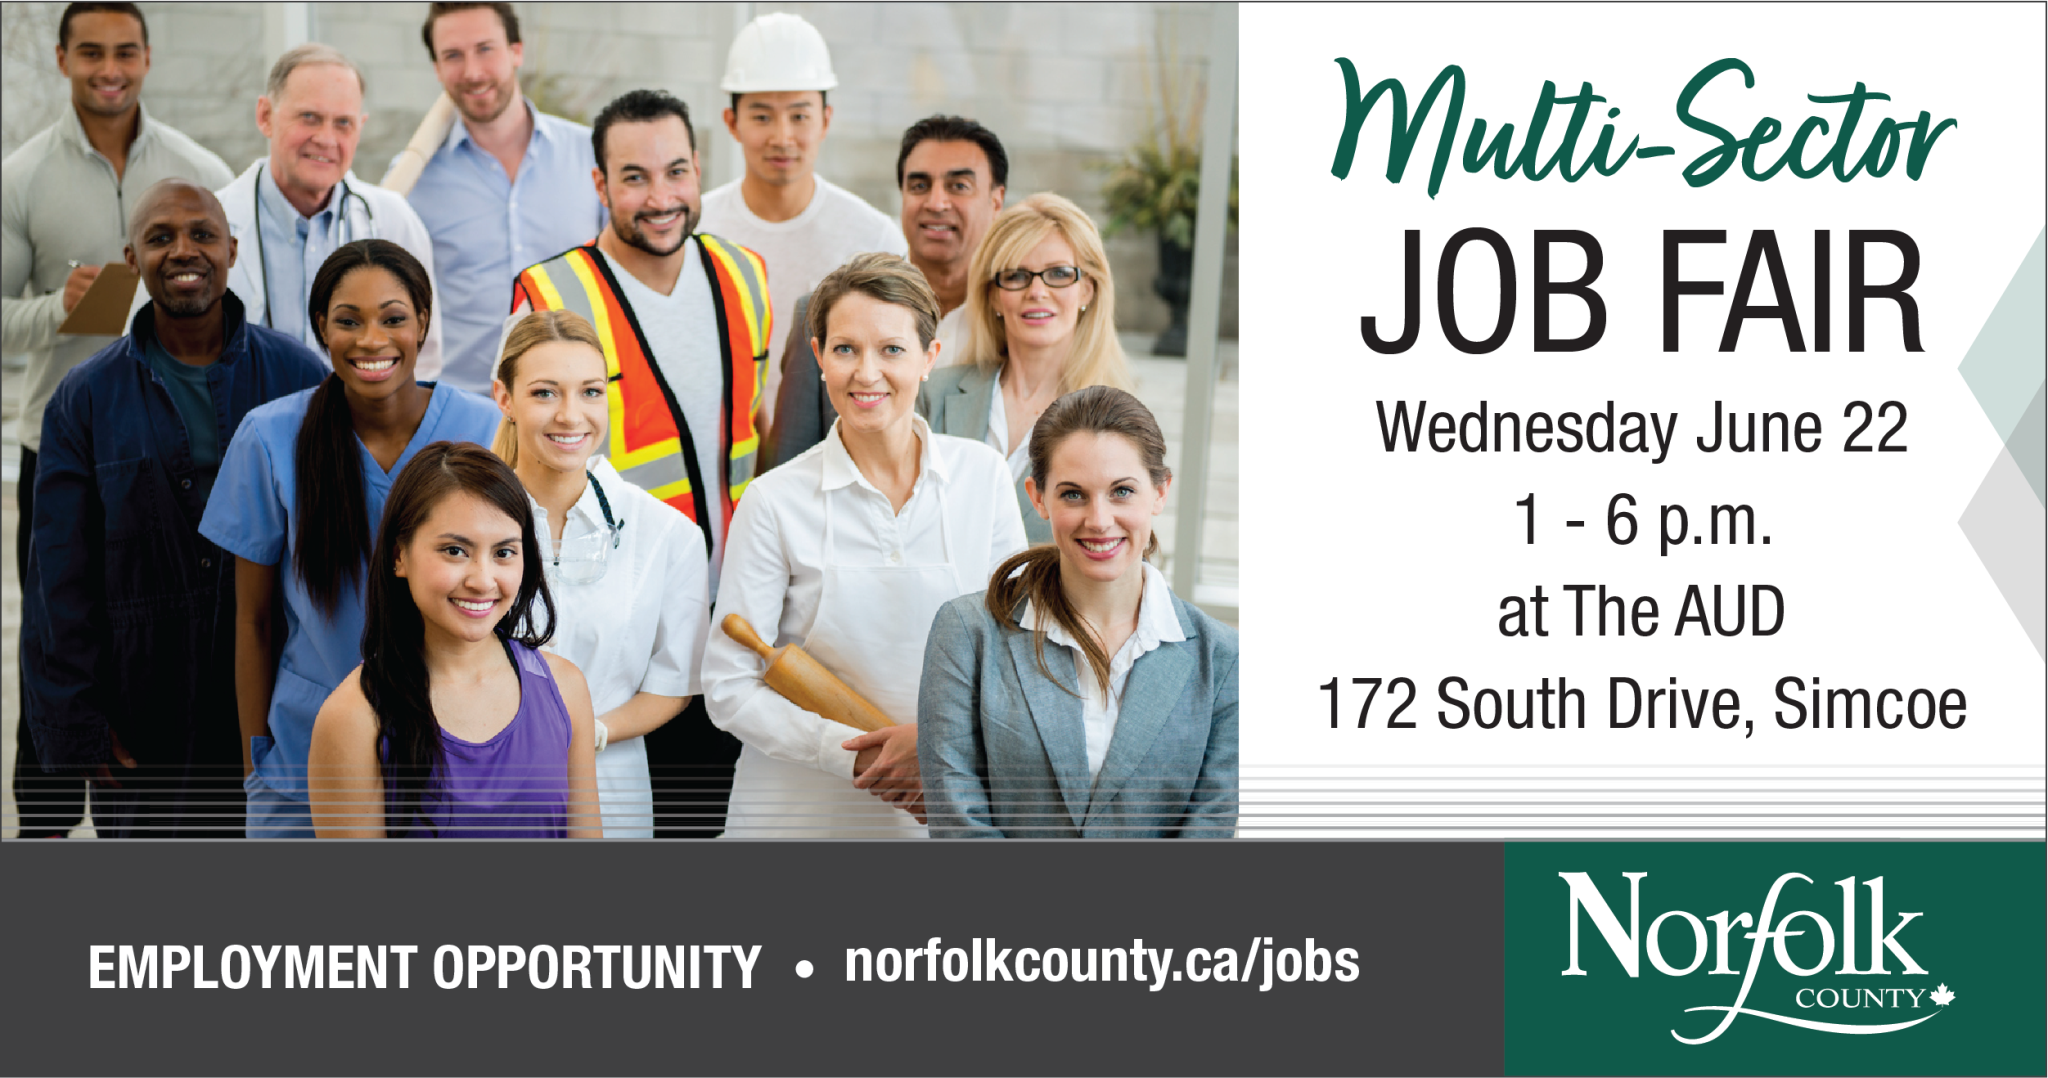 MultiSector Job Fair Government Norfolk County